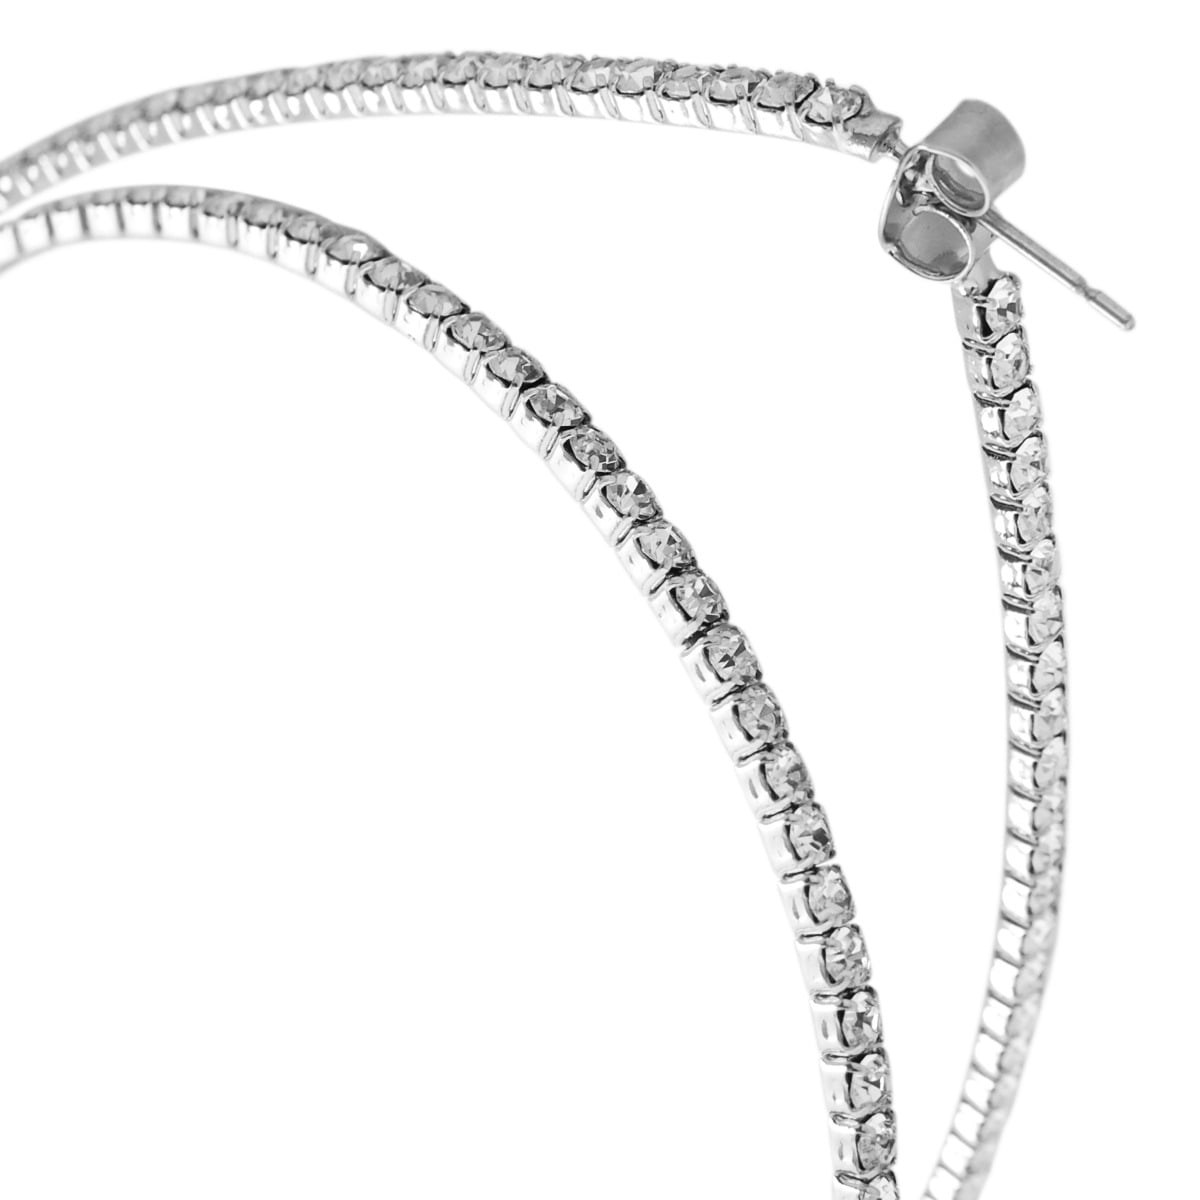 Humble Chic Simulated Diamond Big Hoop Earrings - Rhinestone Teardrop,  Silver-Tone - 3.75 inch